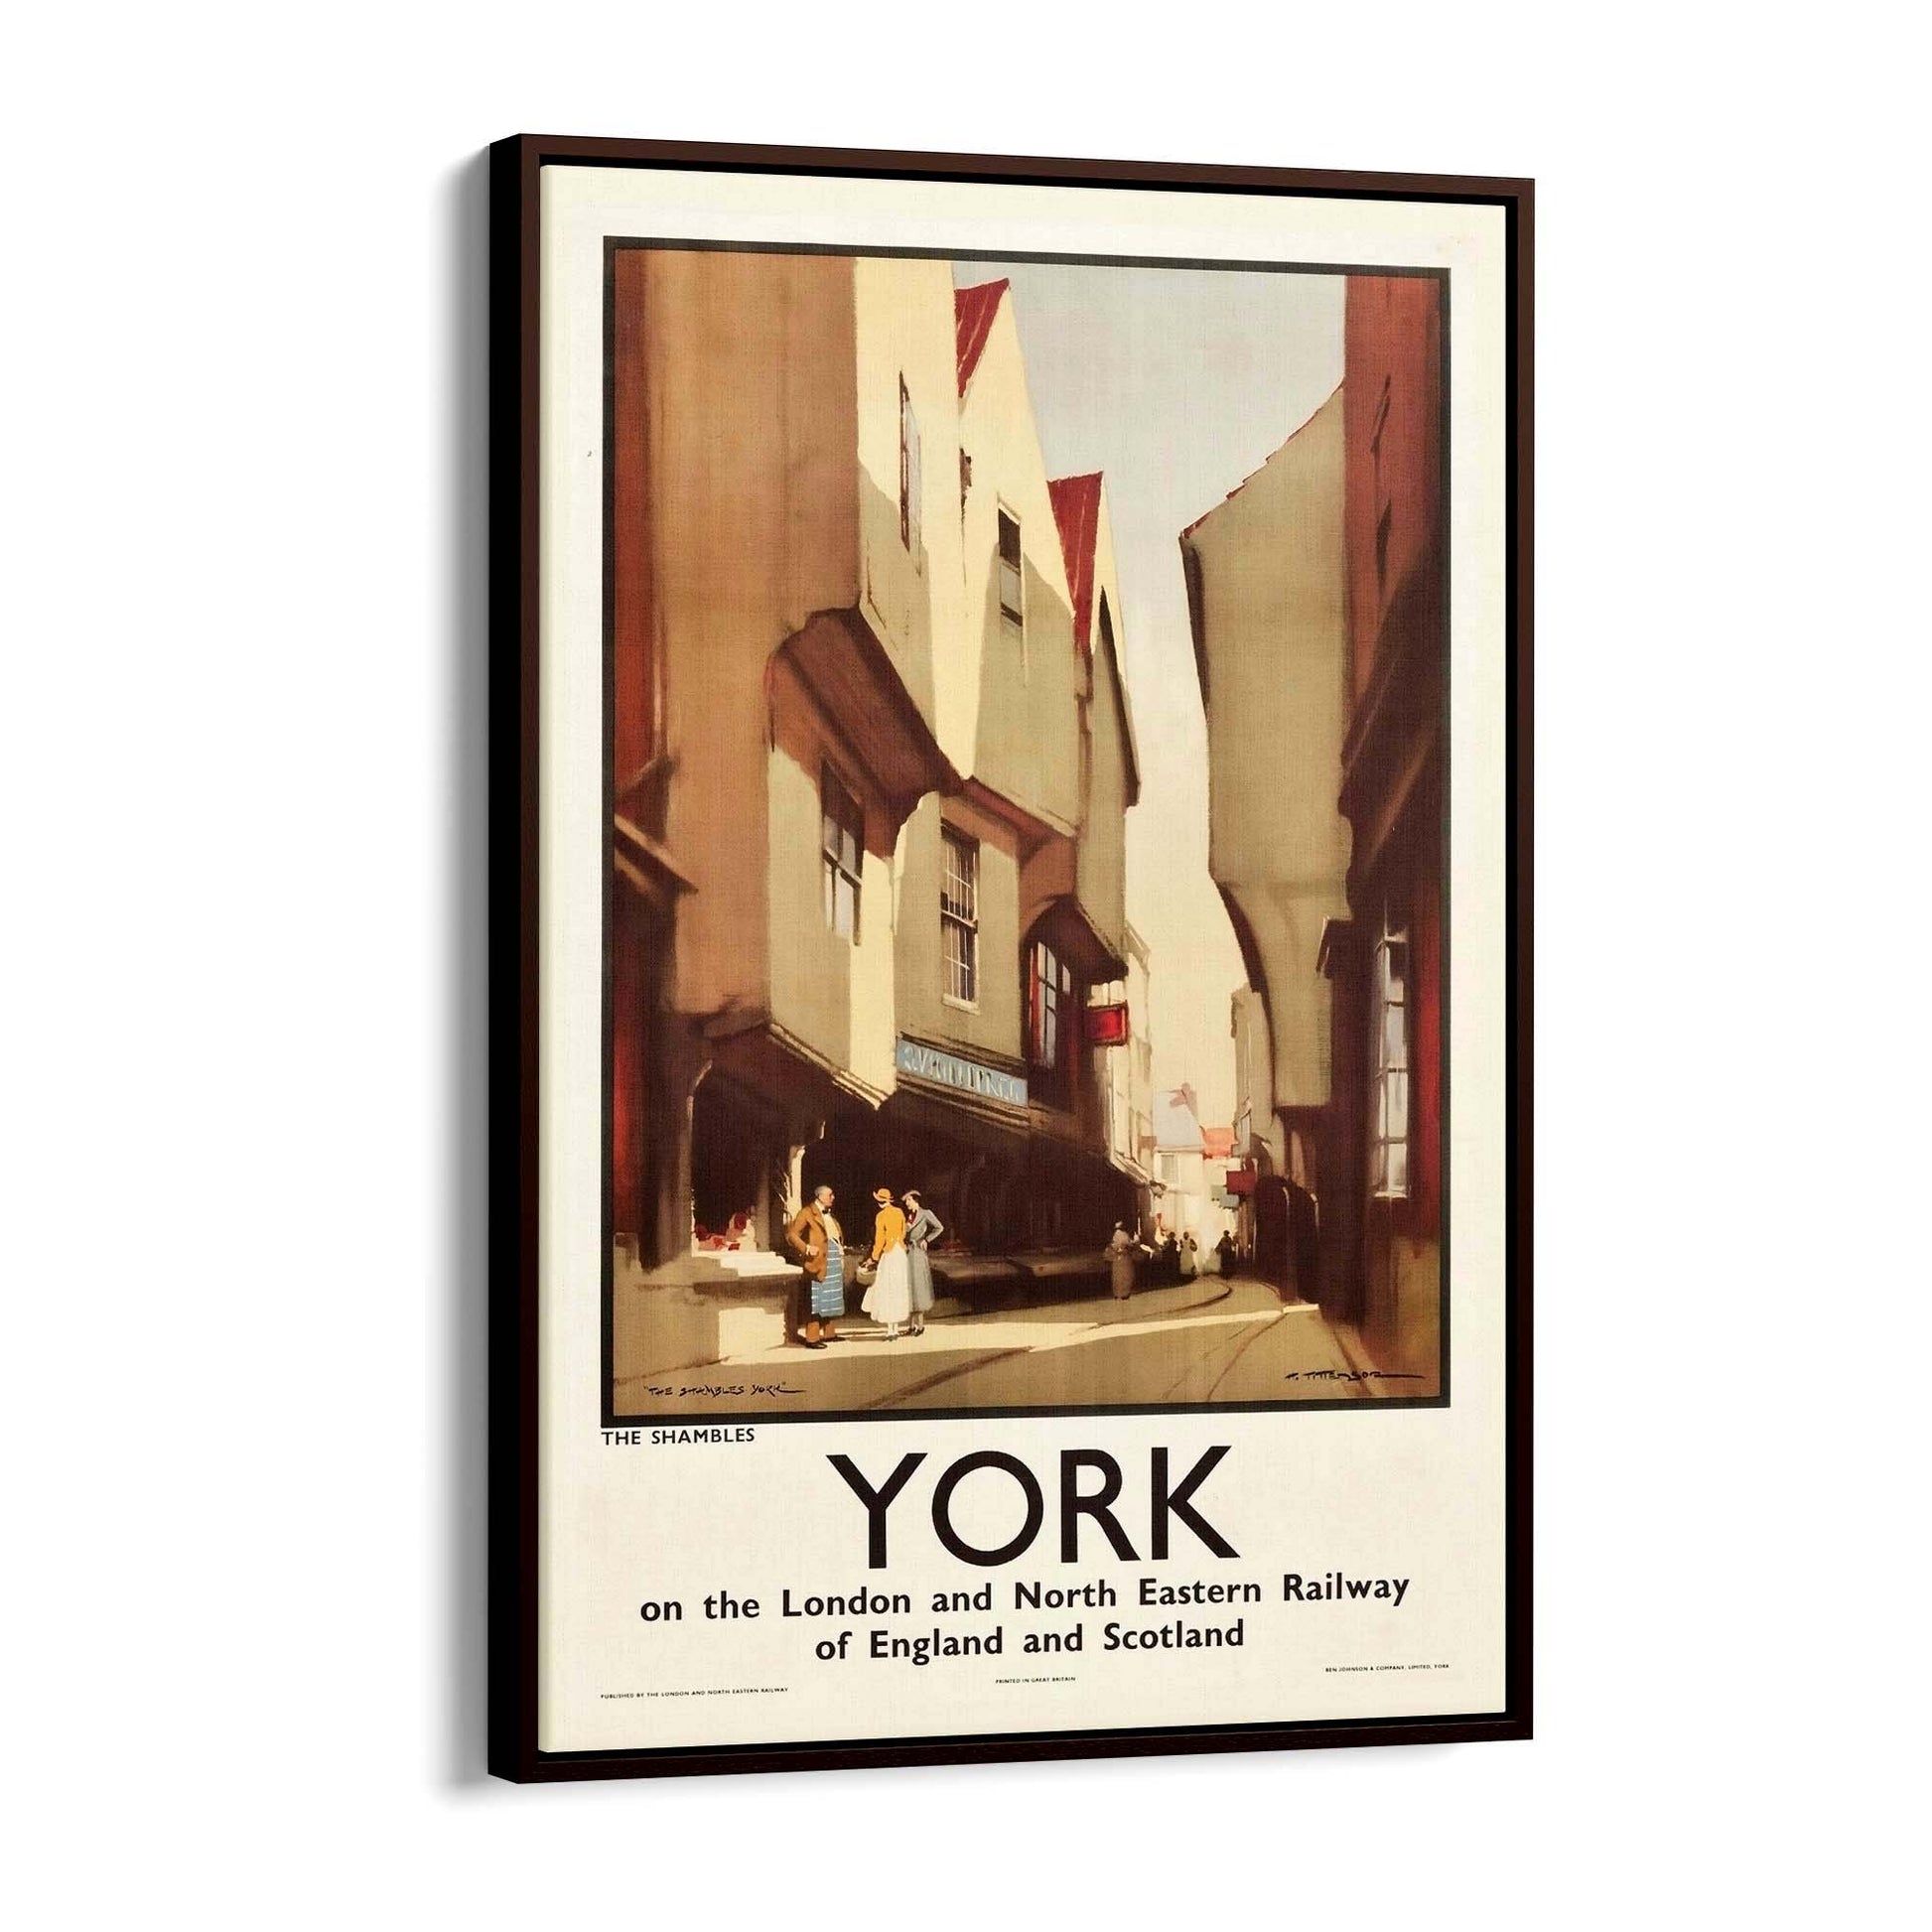 The Shambles York Vintage Travel Advert Wall Art - The Affordable Art Company